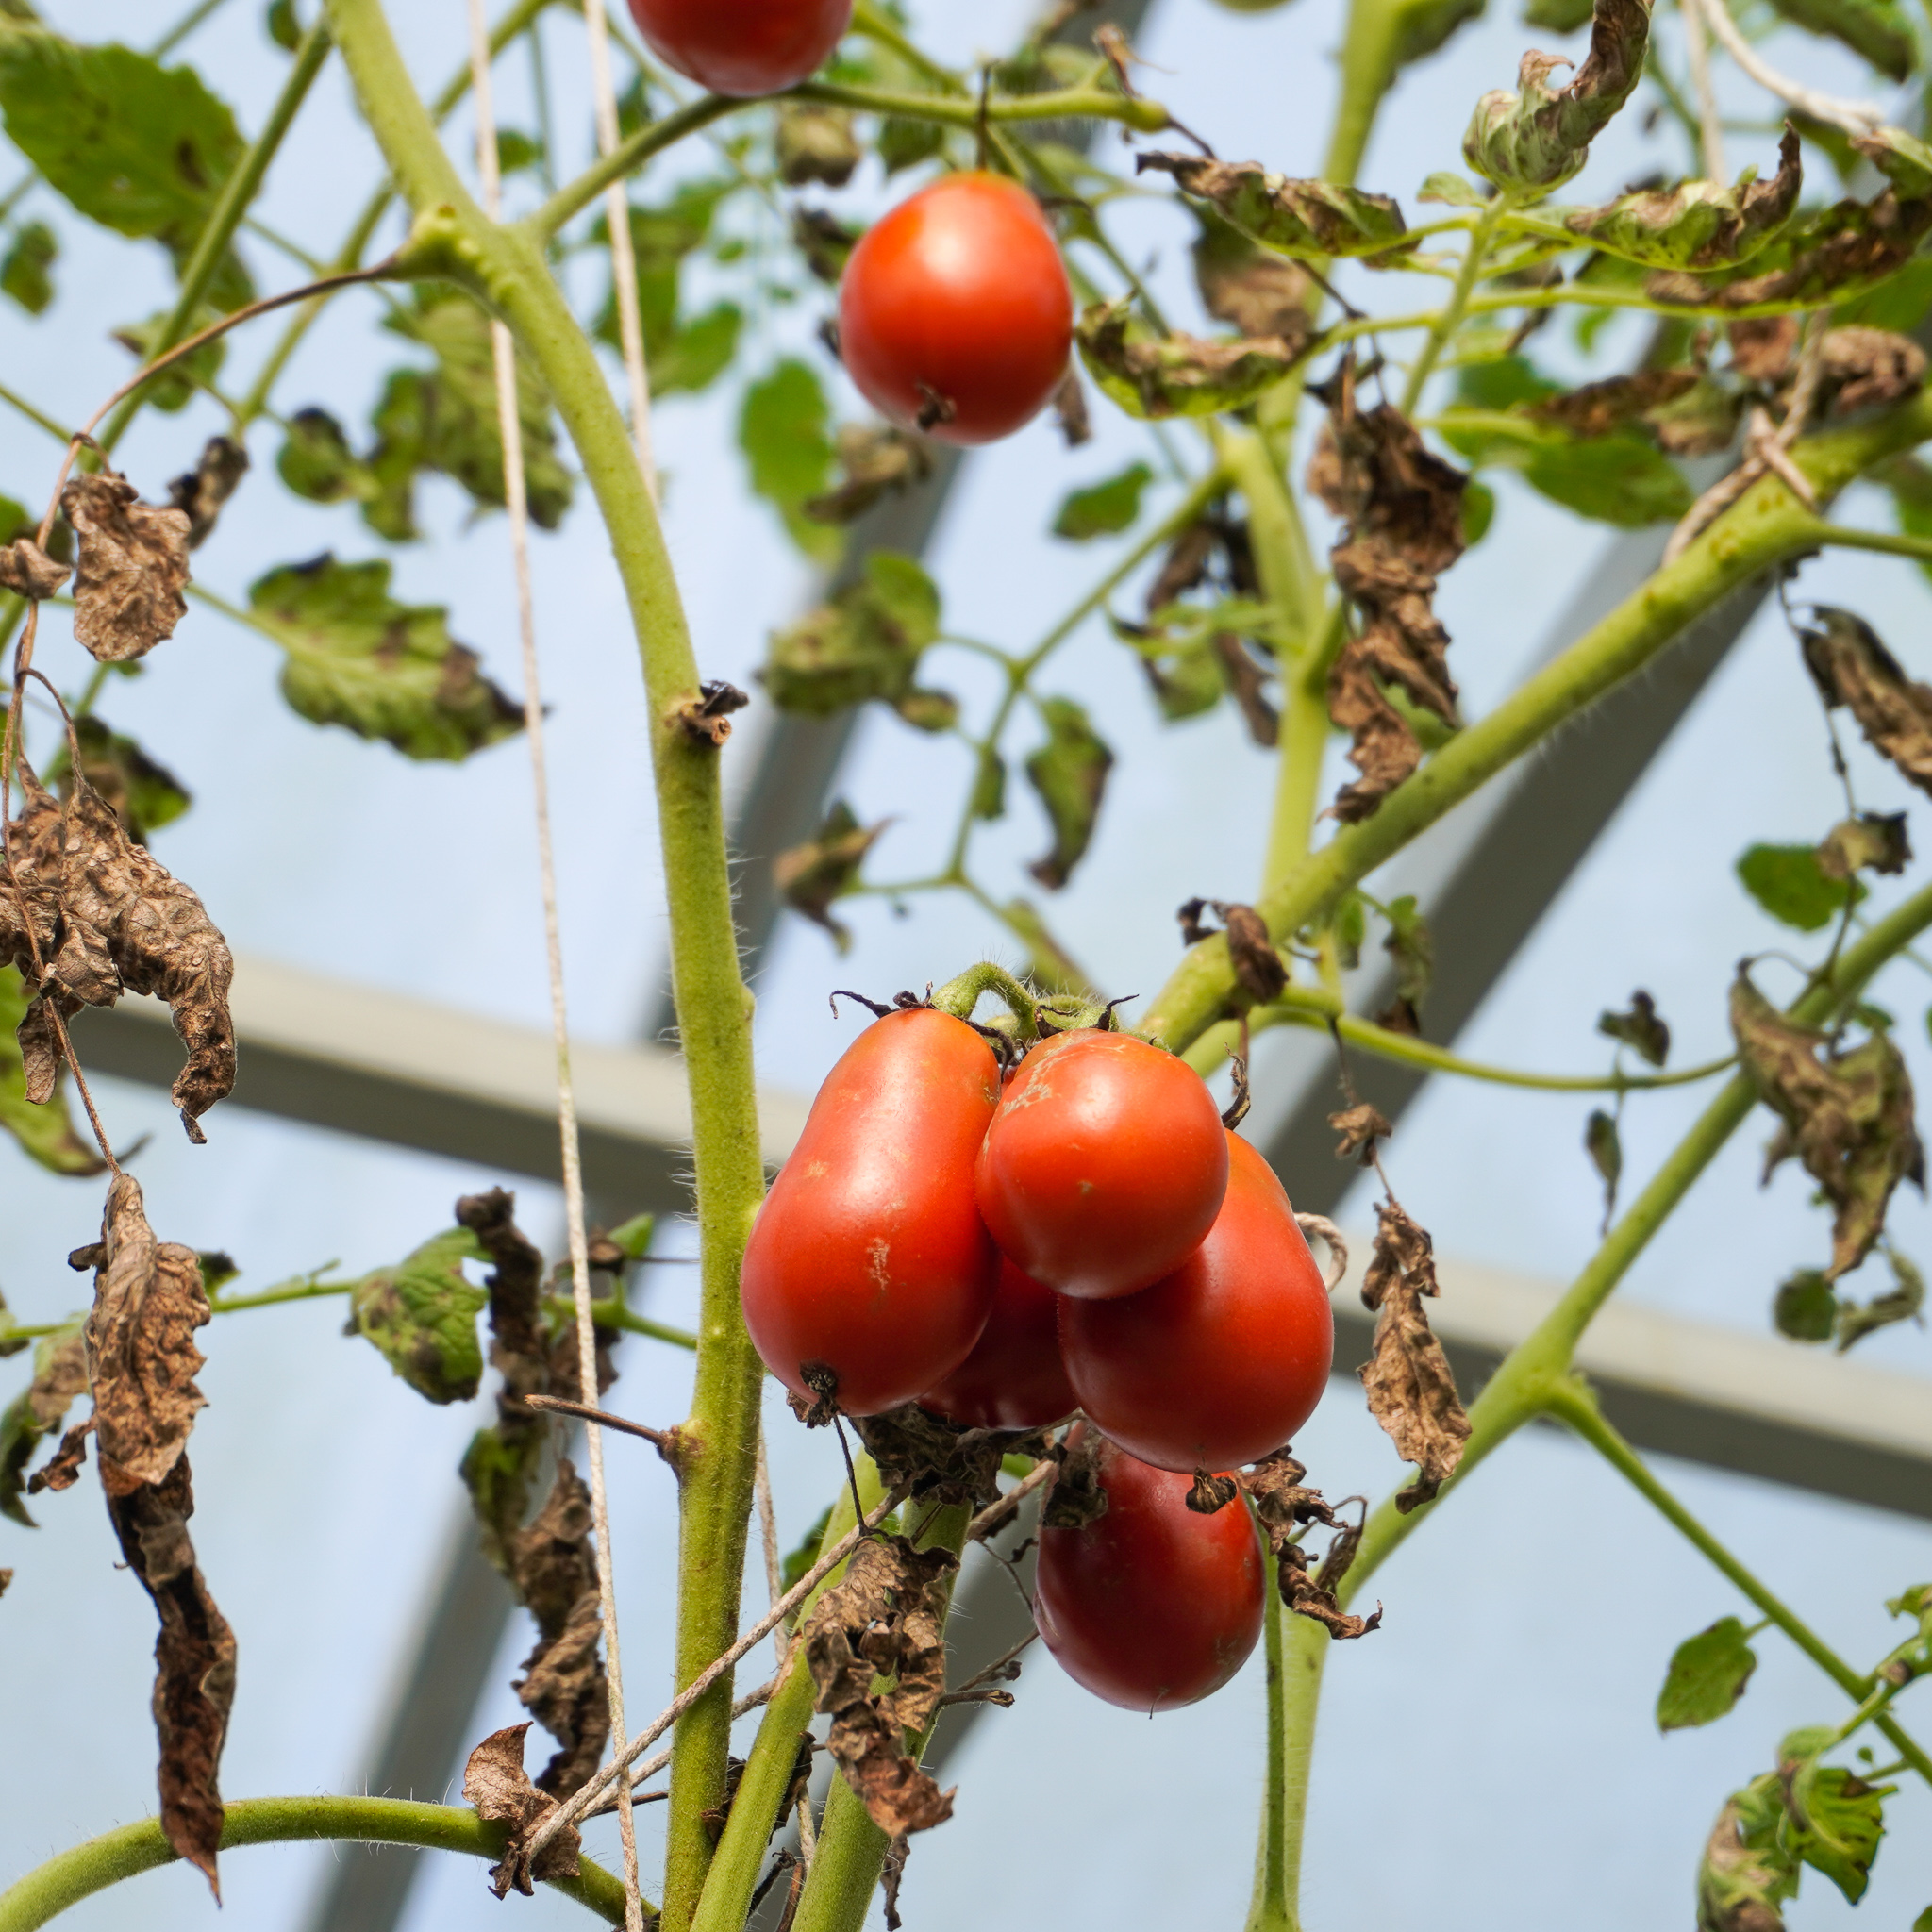 Organic sundried tomatoes in EVOO with garlic & herbs